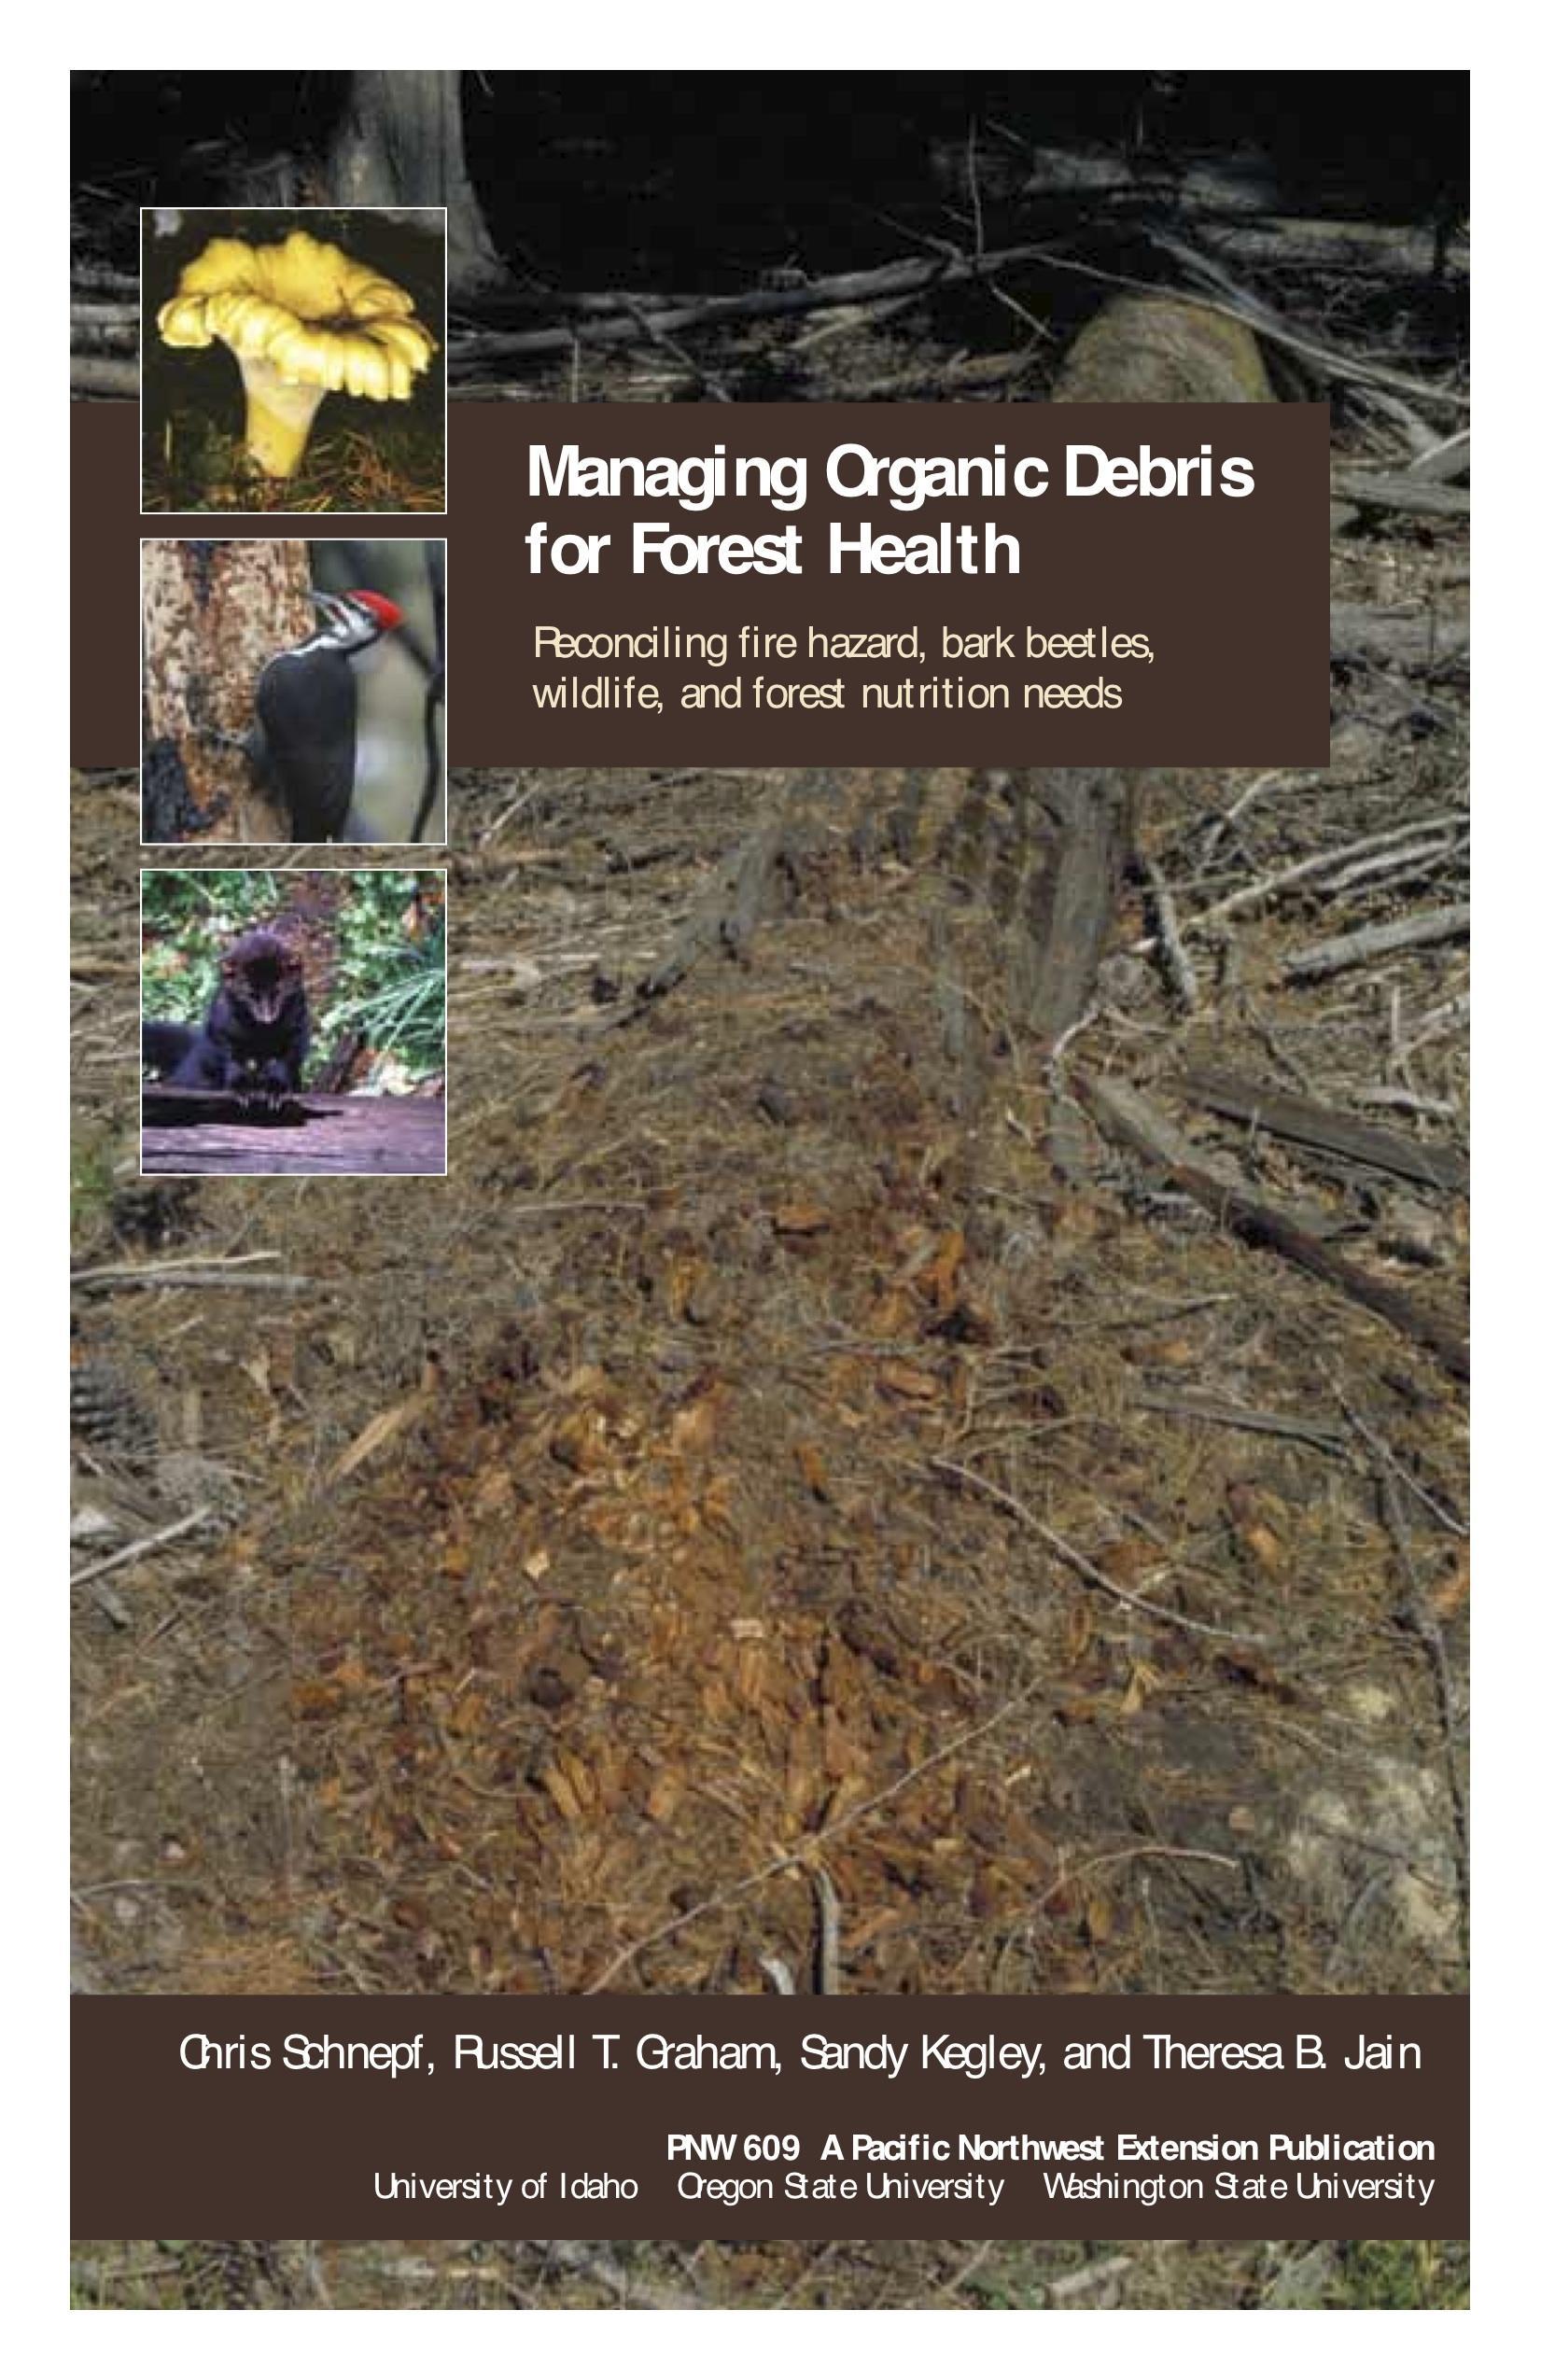 Image of Managing Organic Debris for Forest Health publication